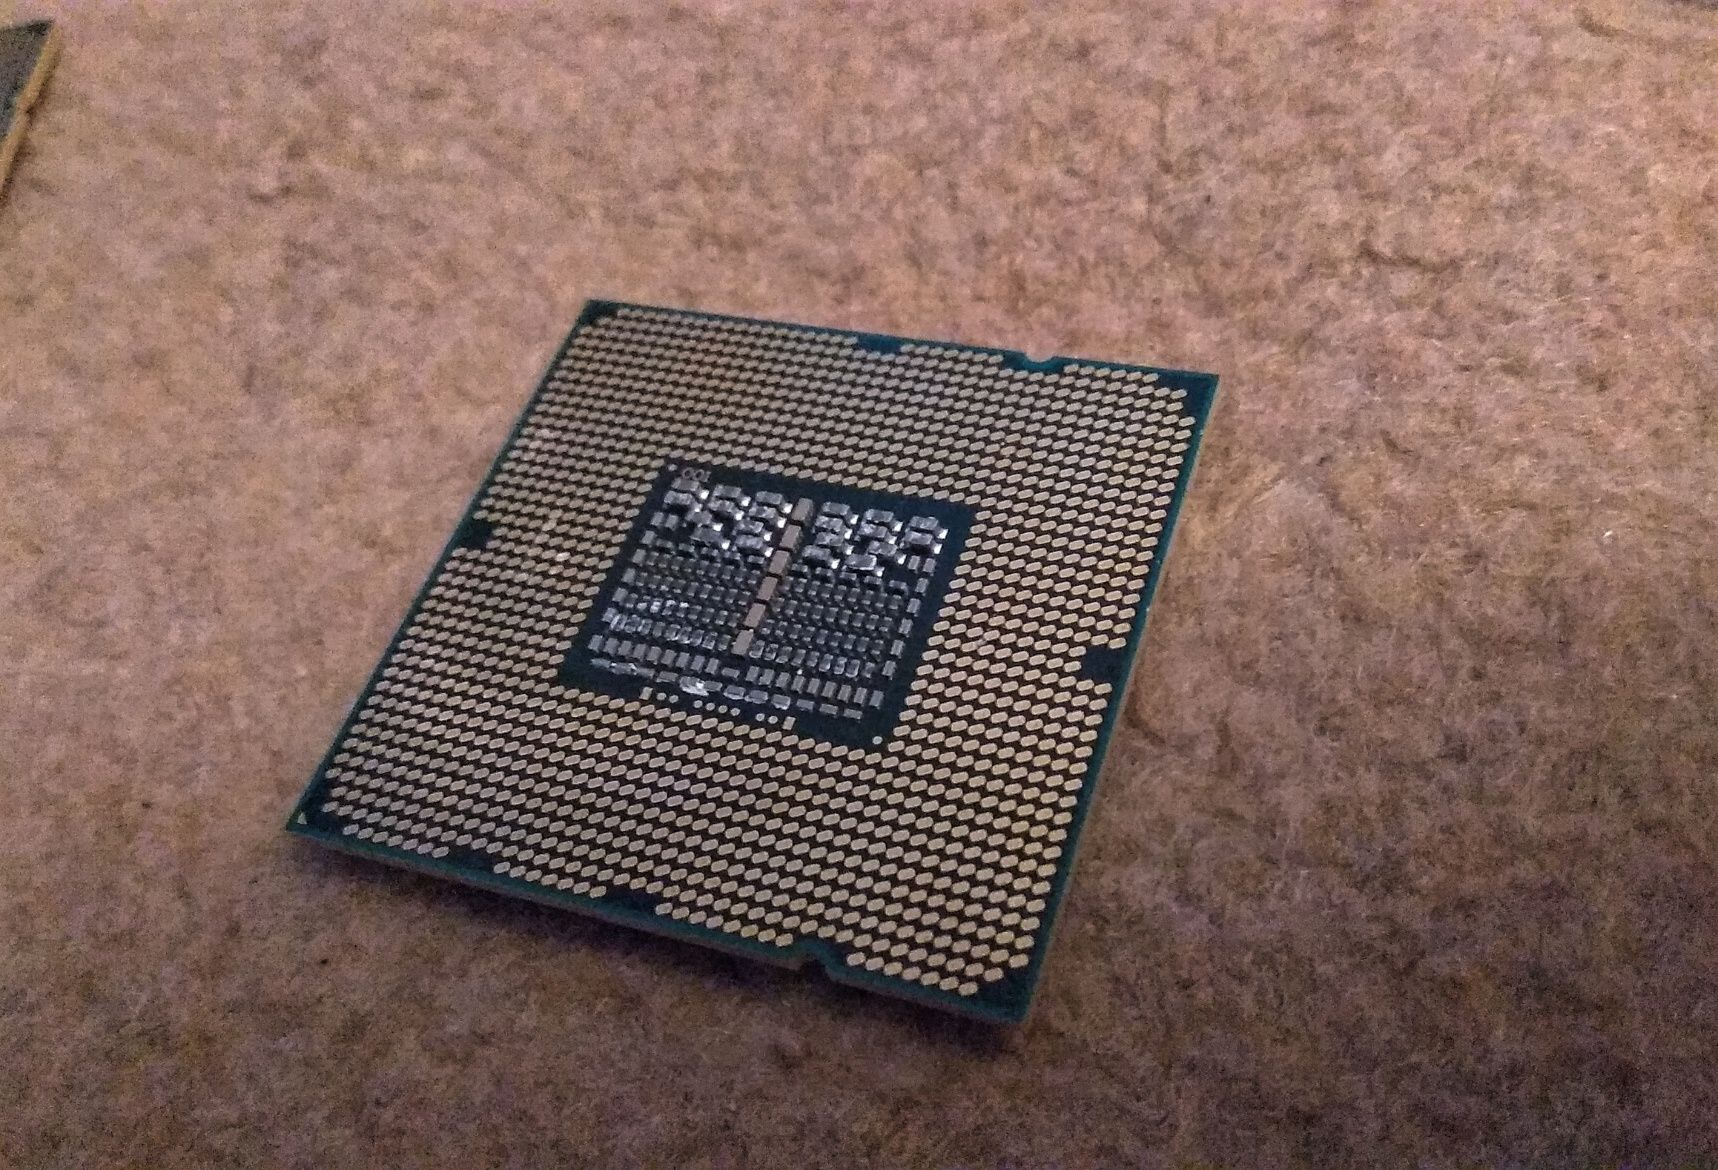 Procesor intel i7, Xeon,AMD Athlon64 !!!